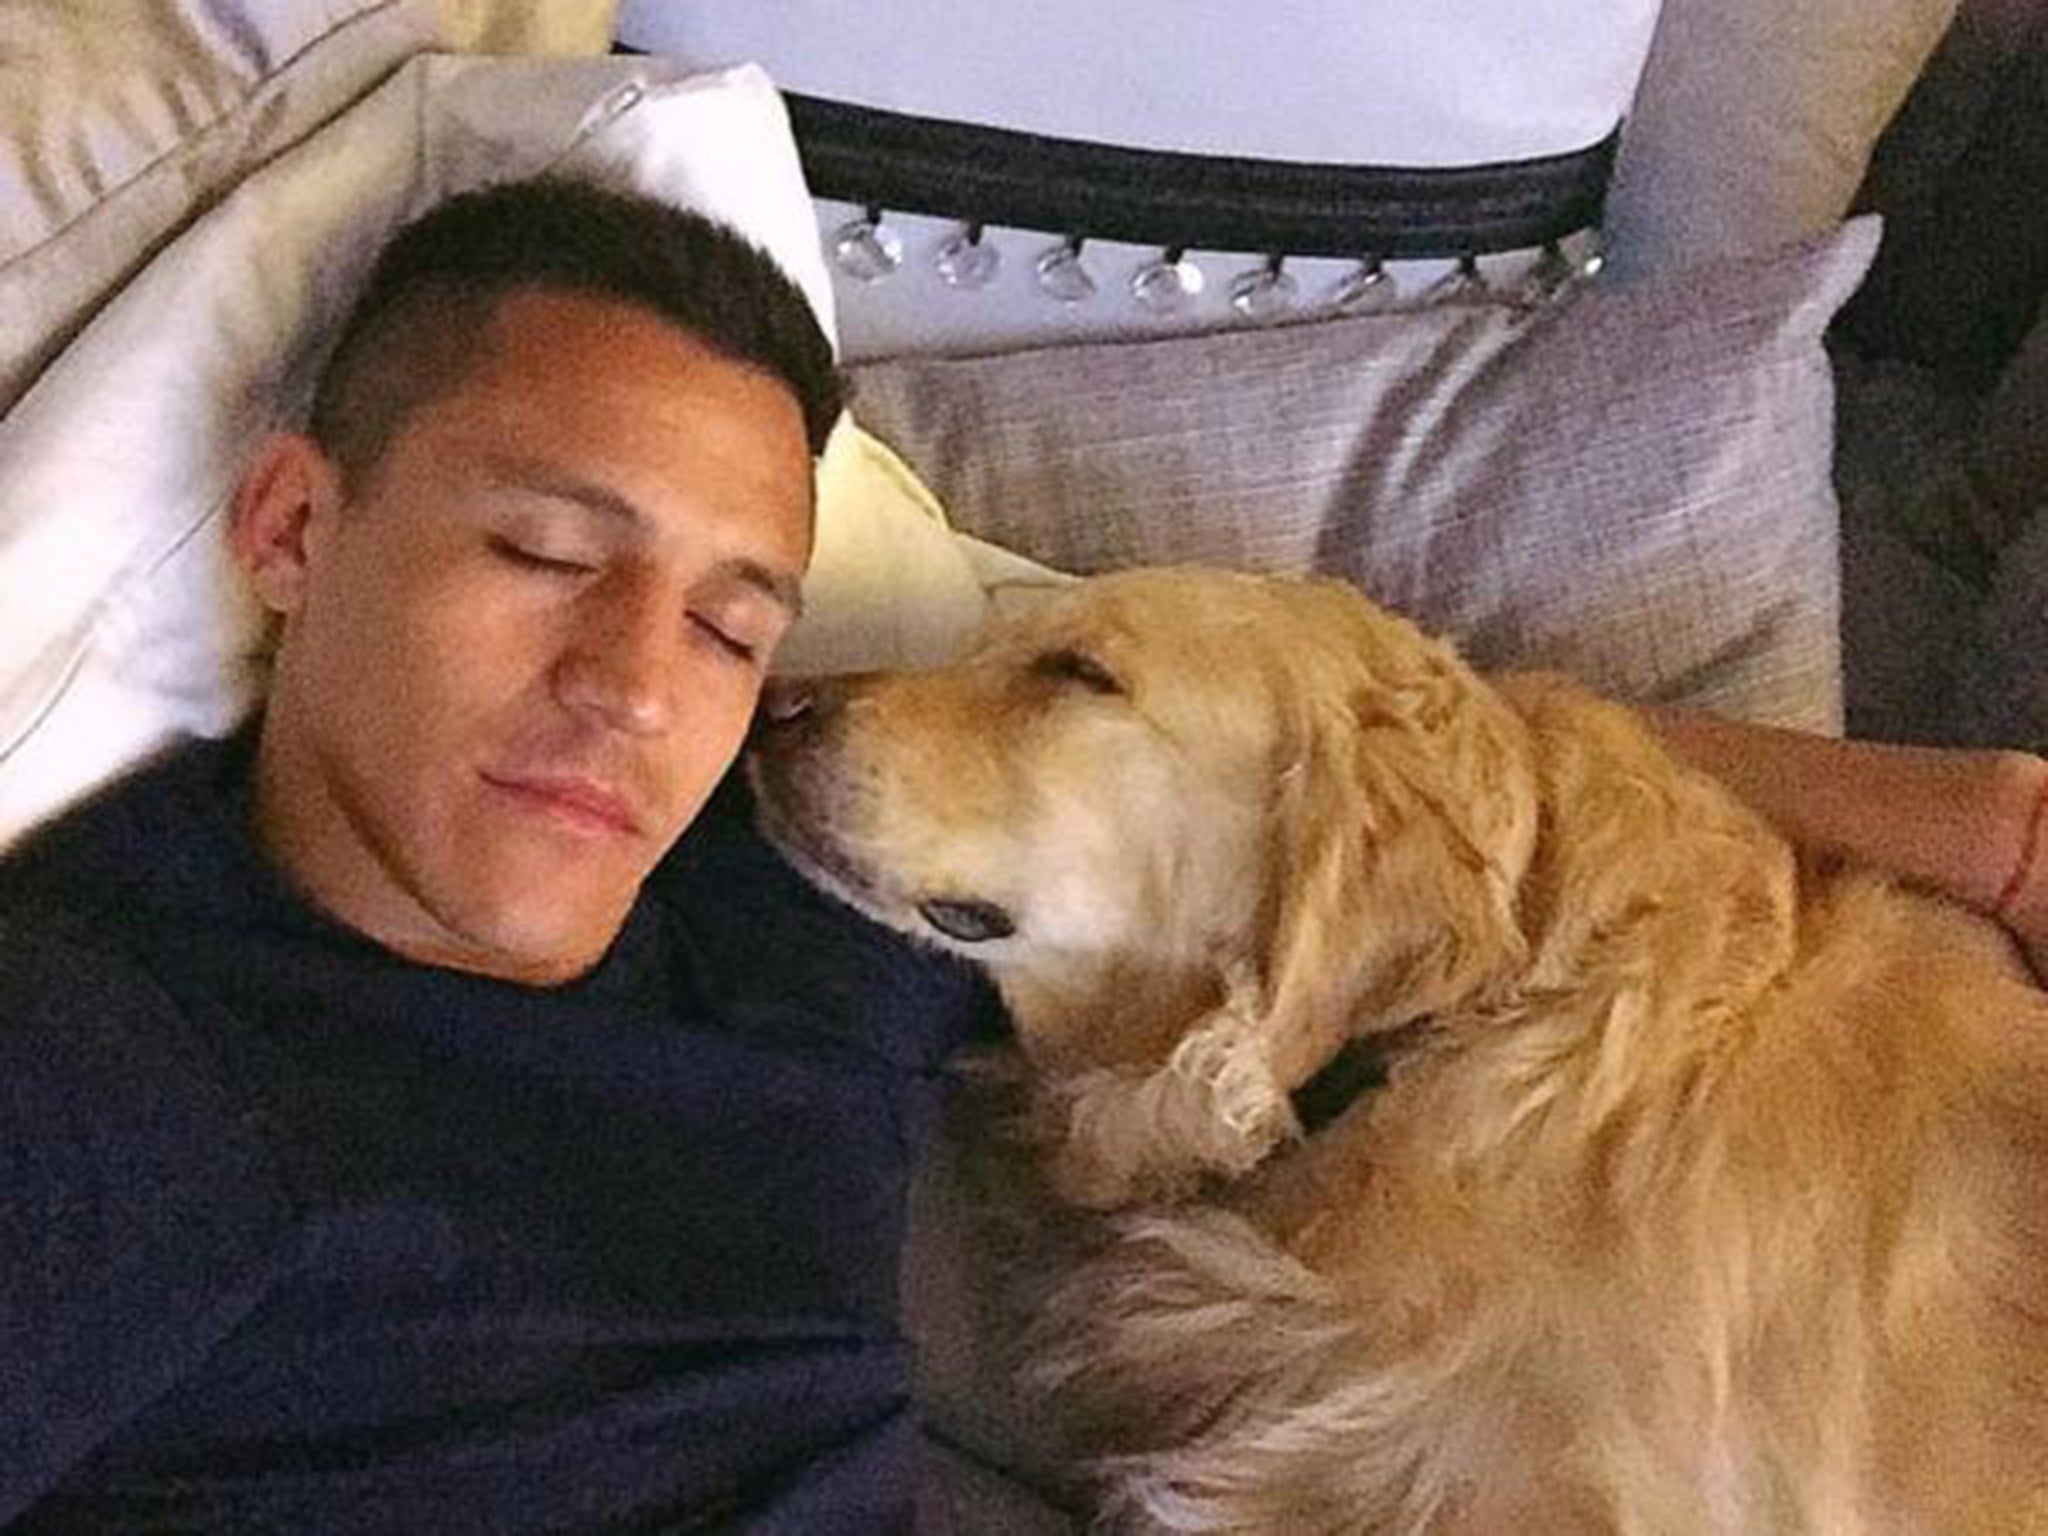 Alexis Sanchez sleeps alongside his dog Atom